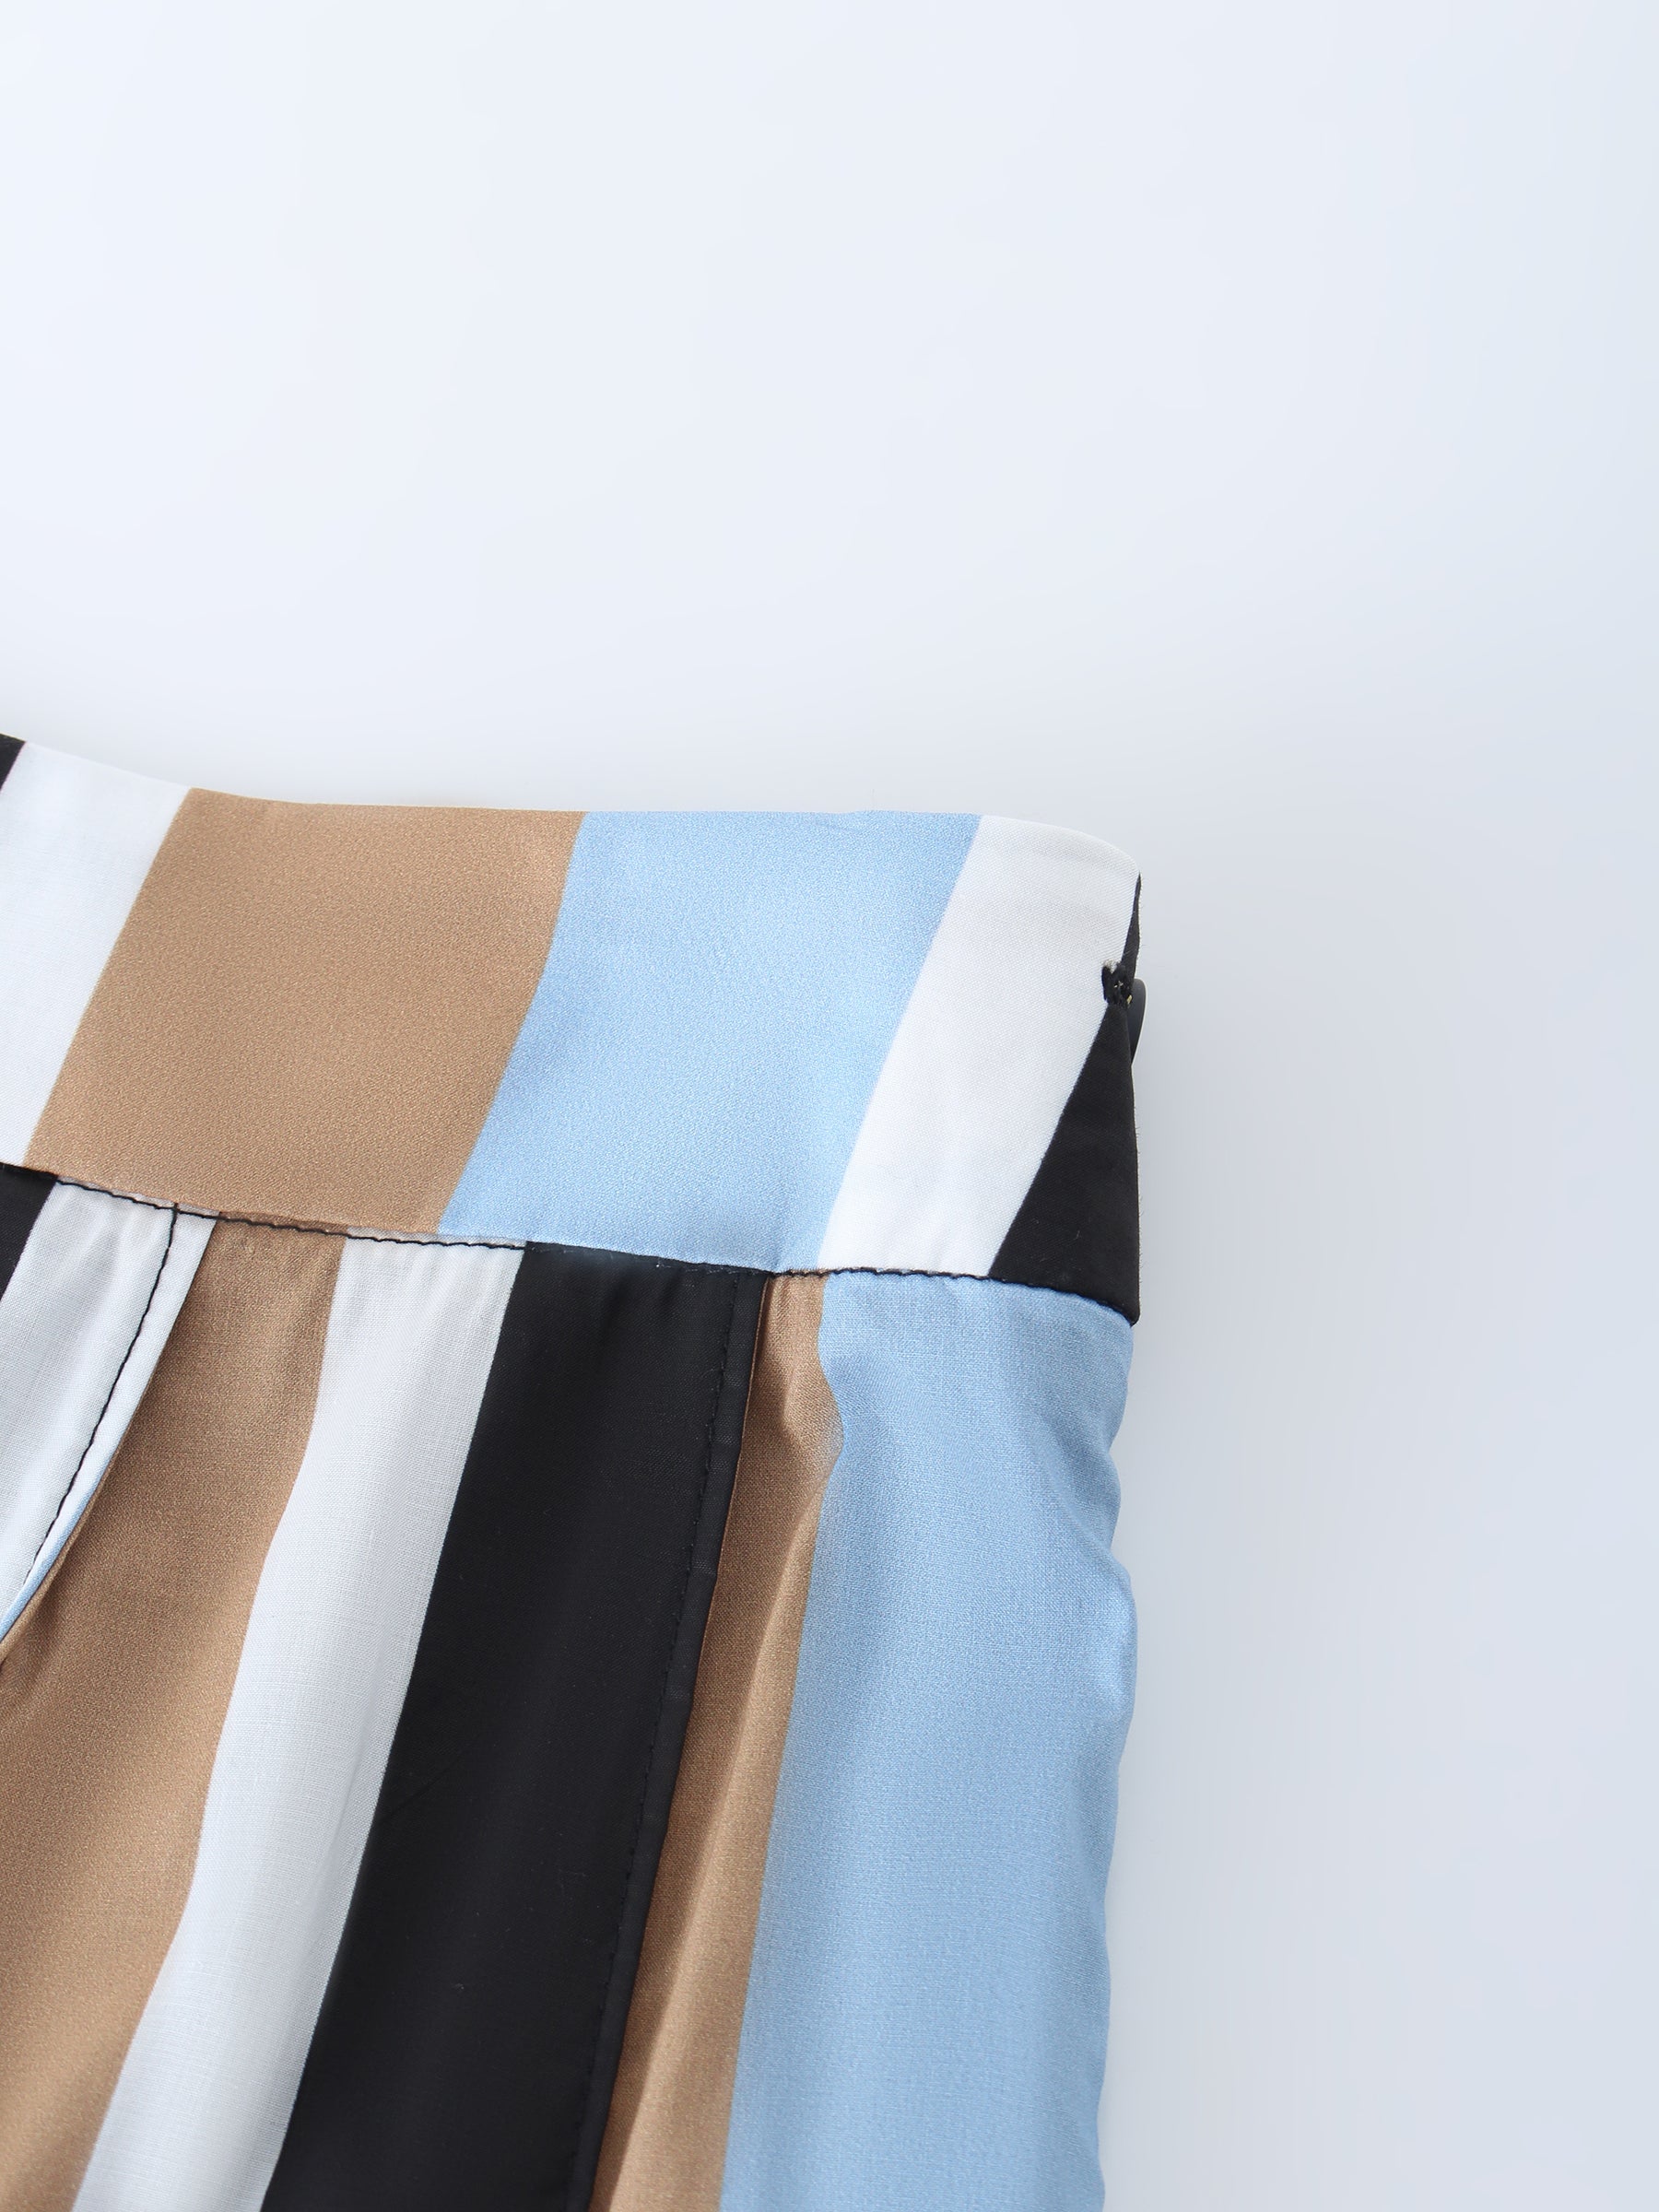 Multi Stripe Skirt-Tan/Blue/White